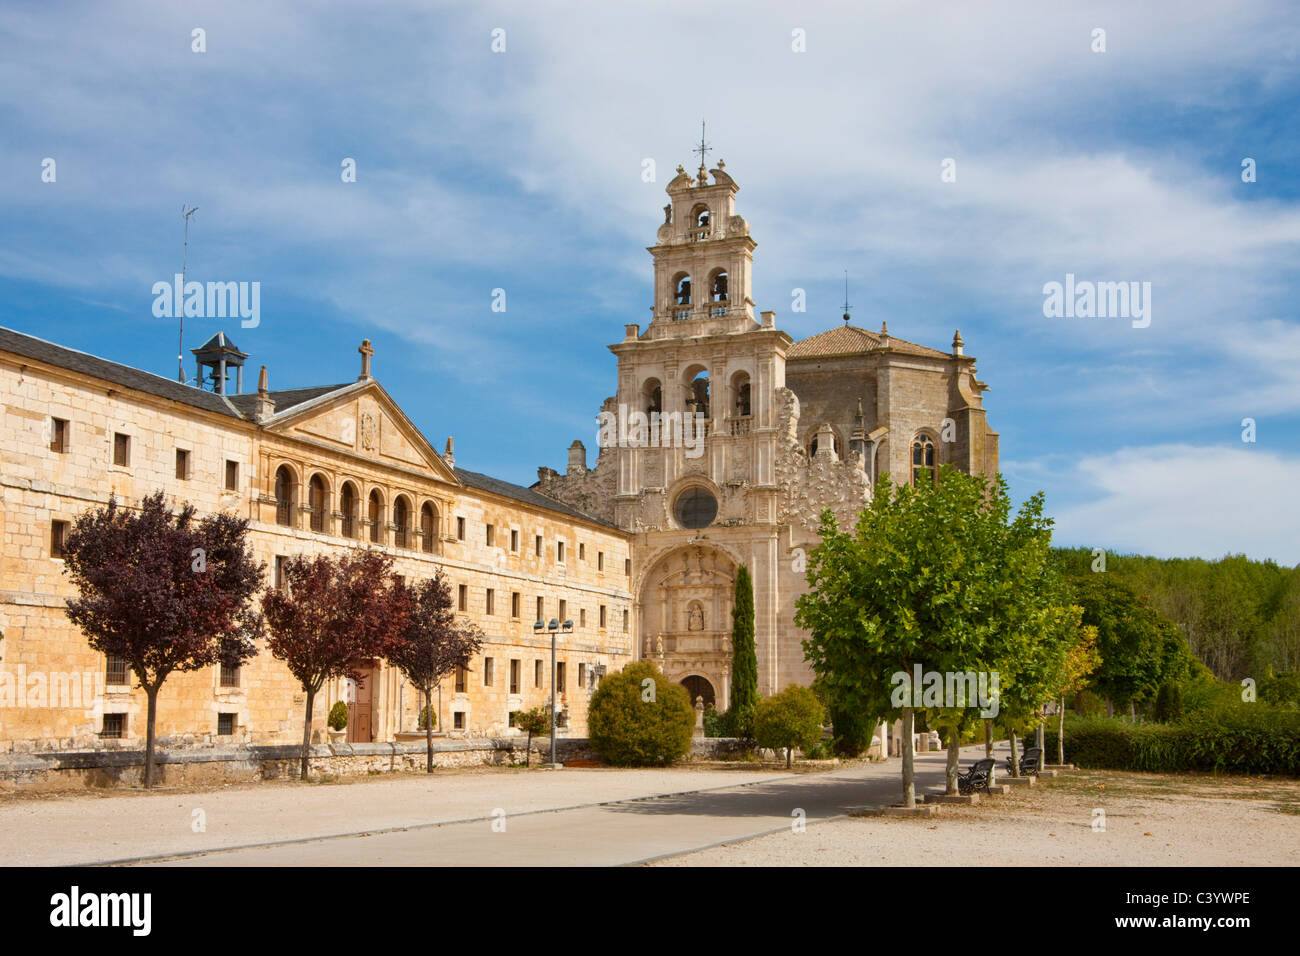 Spain, Europe, Castile Leon, cloister, monastery, La Vid, bell tower, belfry, religion Stock Photo